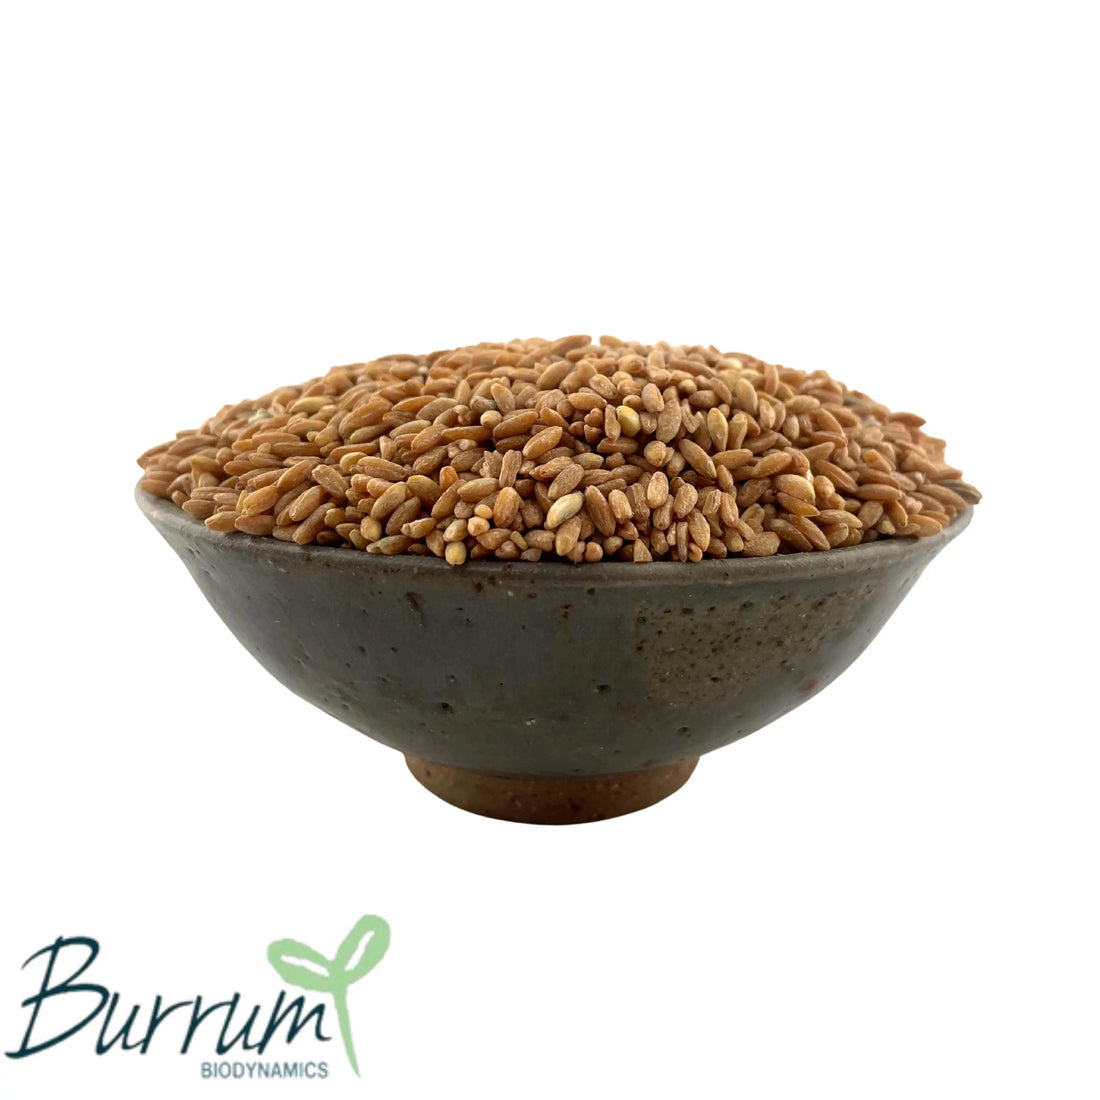 Farro (Pearled Spelt) Biodynamic 750g-Pulse & Grain-Burrum Biodynamics-Sovereign Foods-Organic-Biodynamic-Grain-Home Milling-Australian Grown